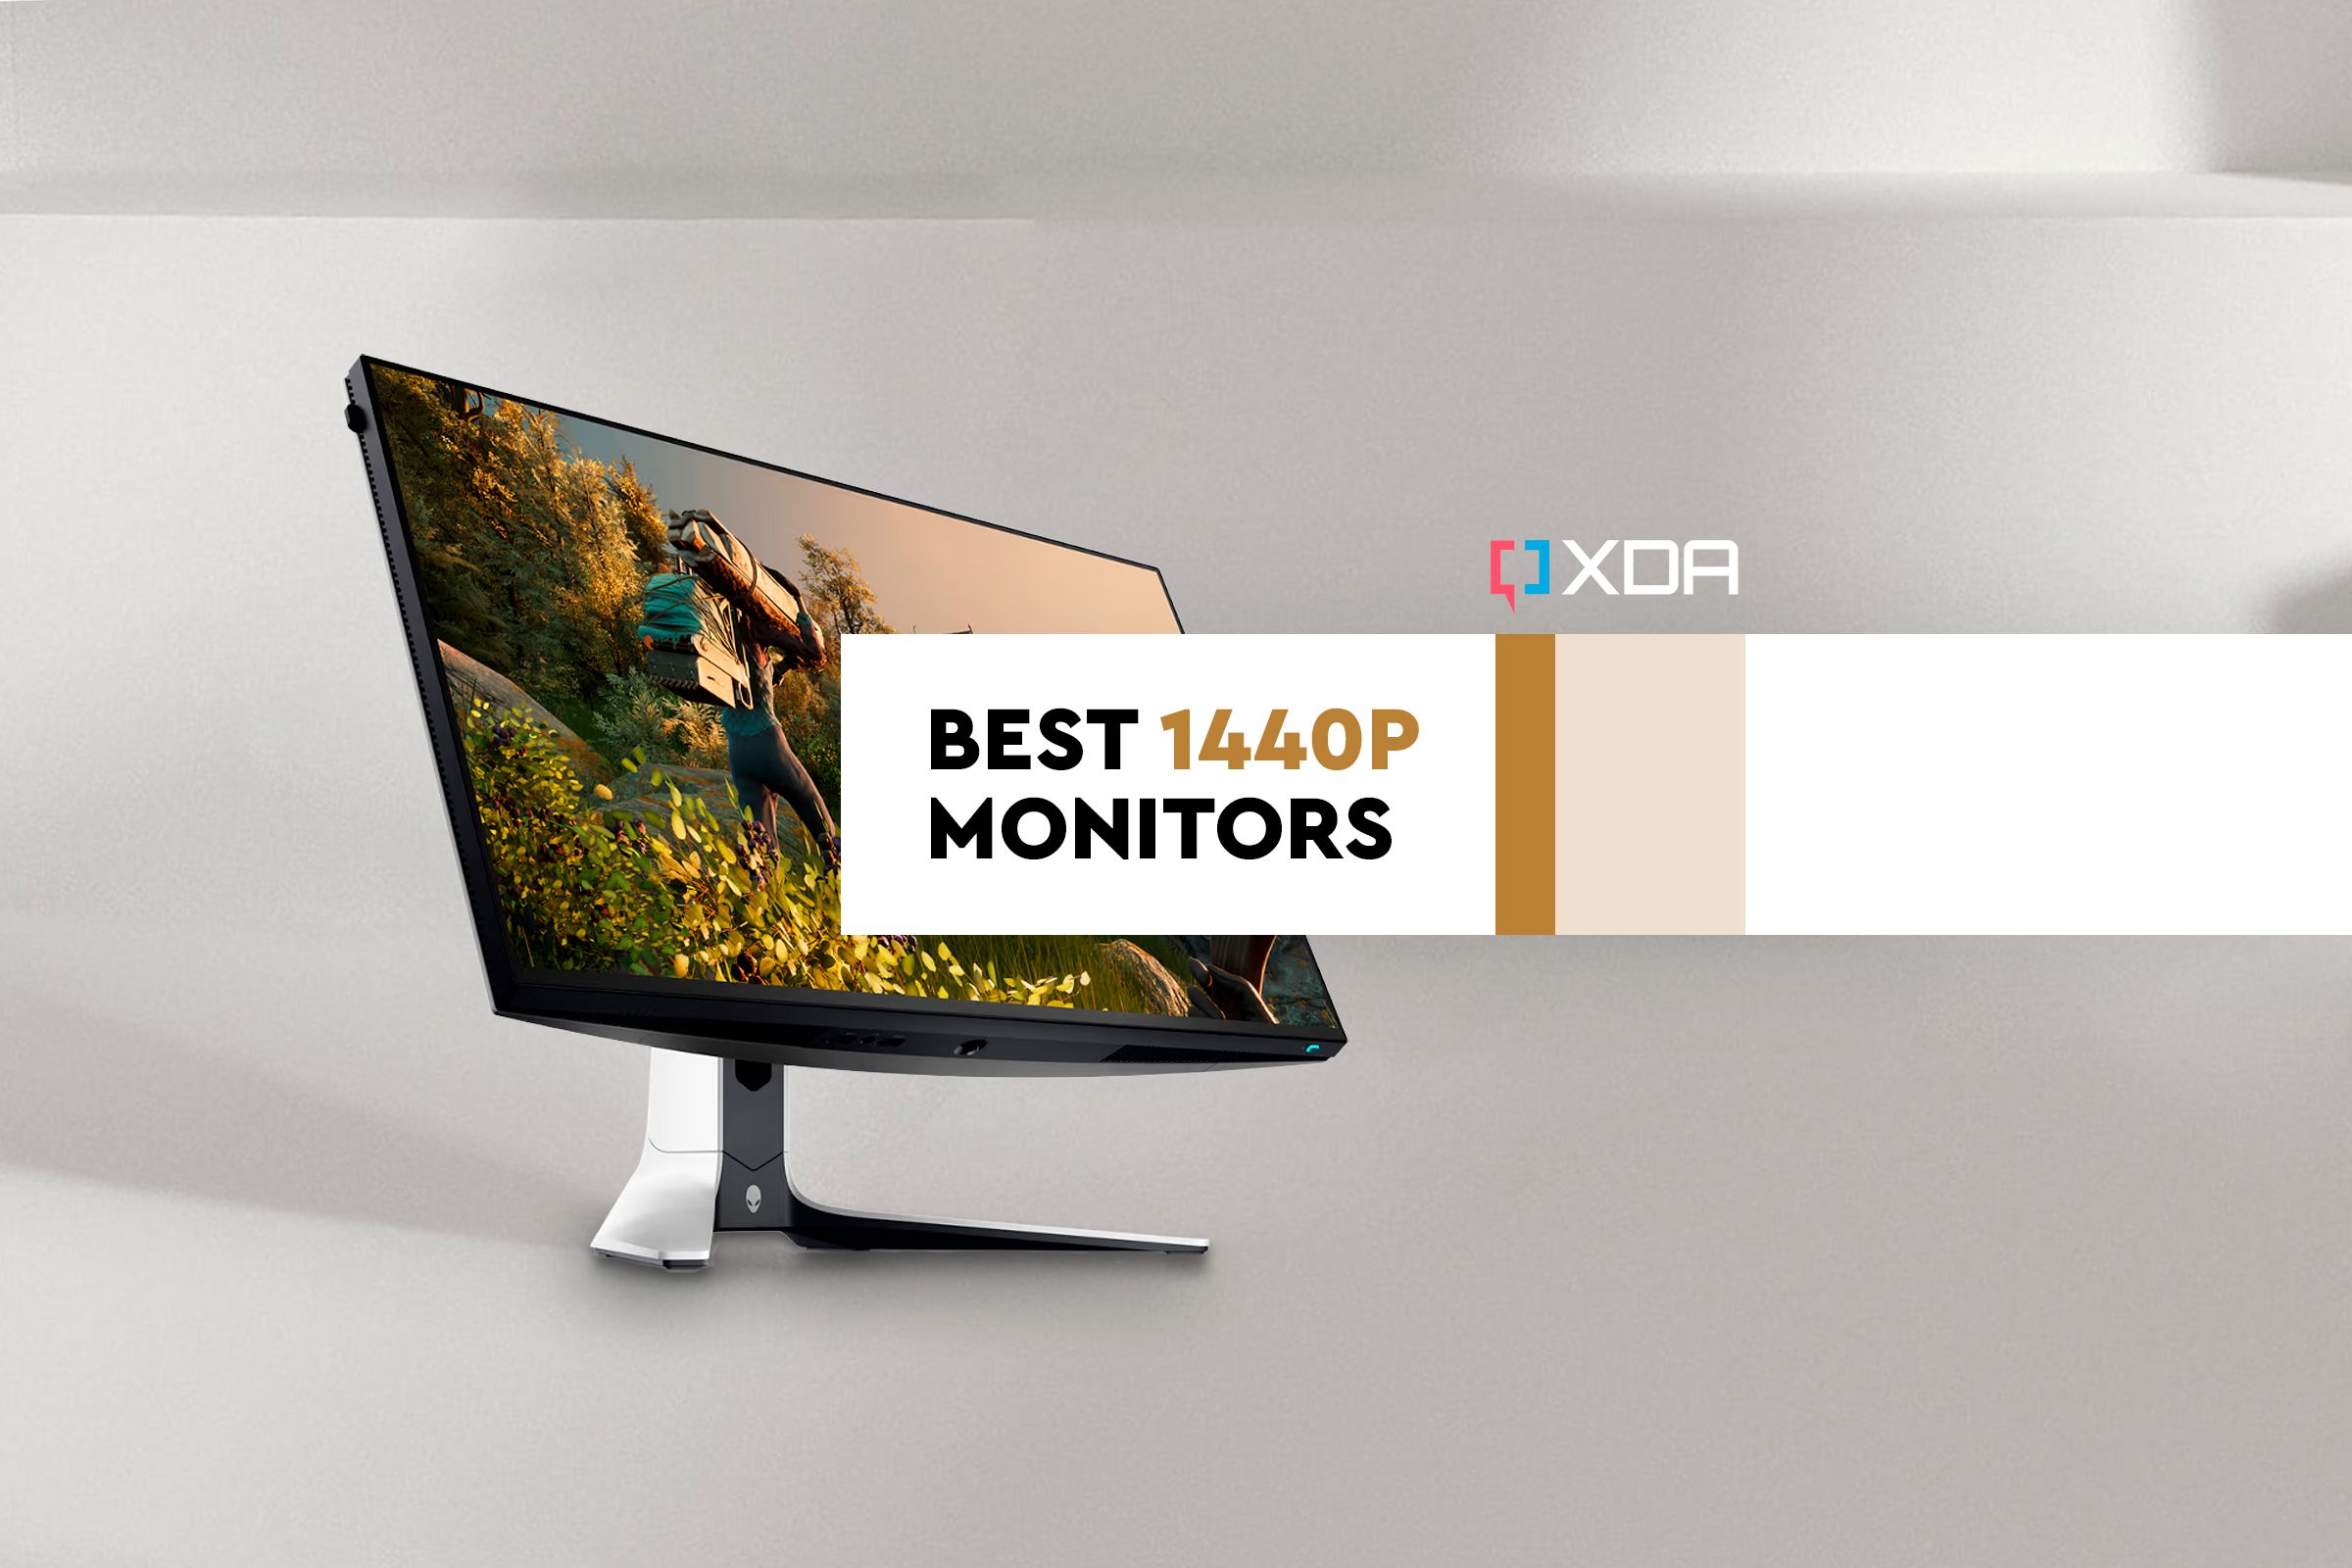 The Best Budget 1440p Monitors